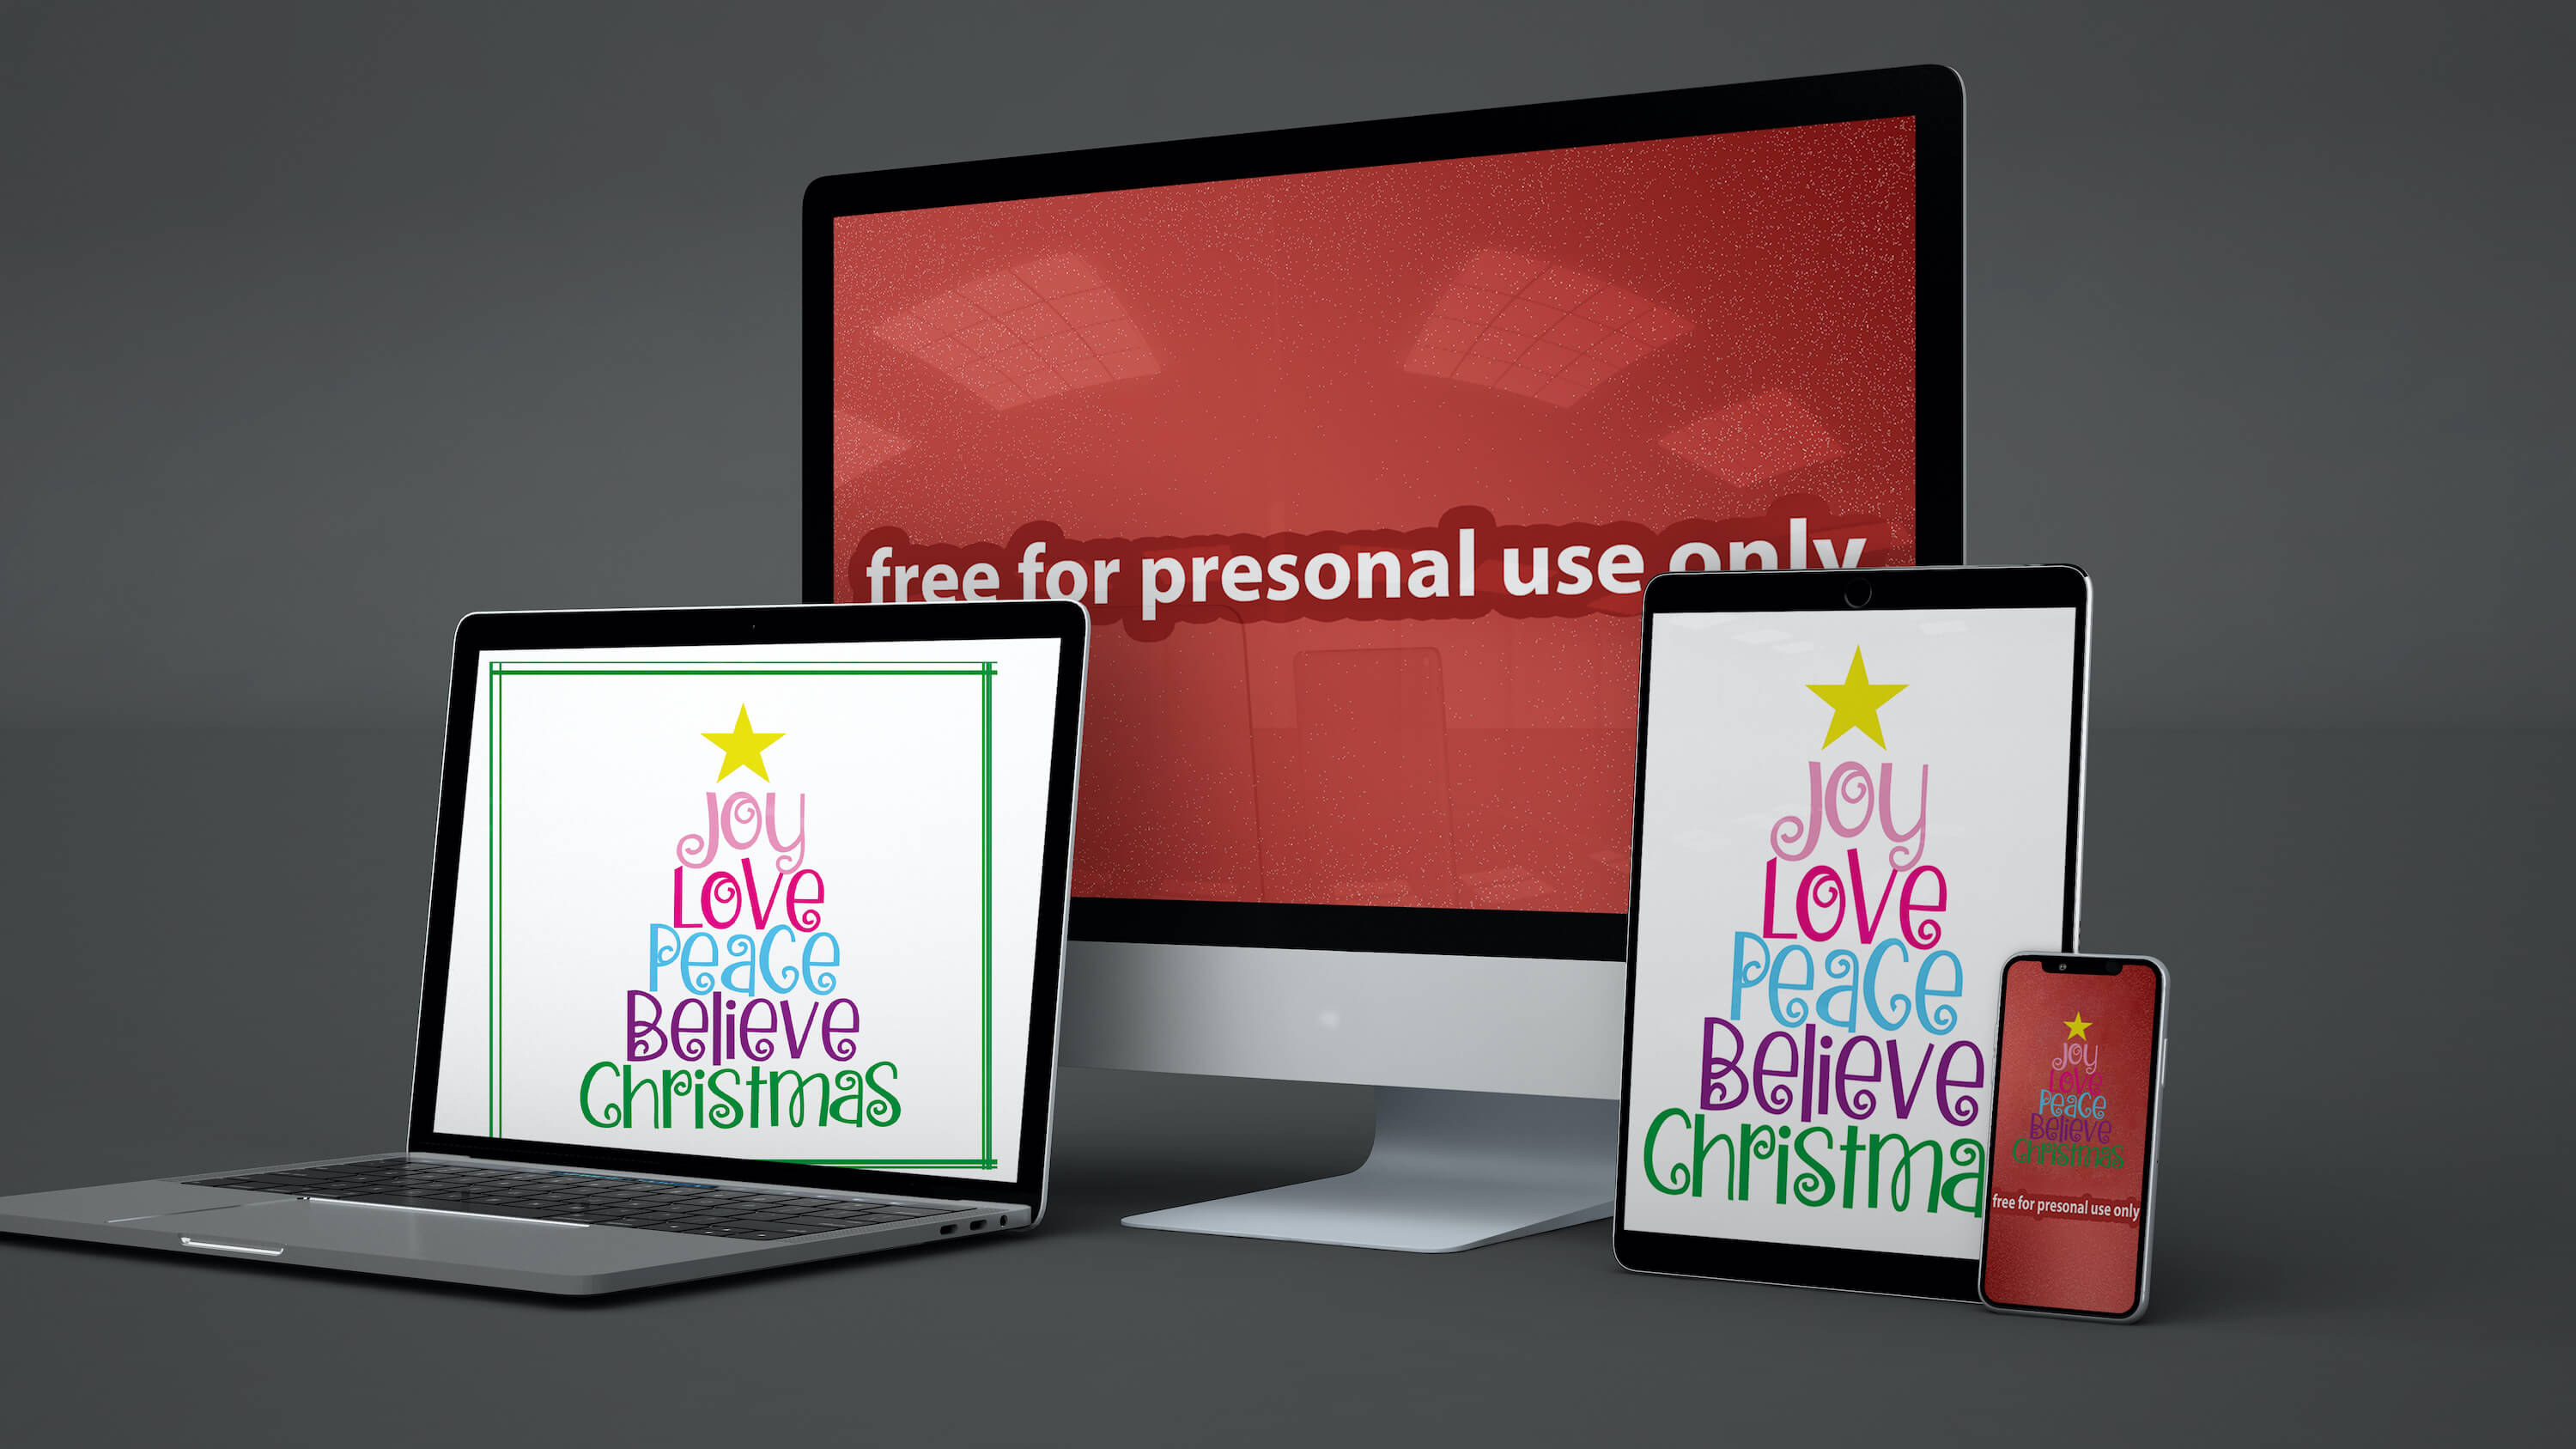 Joy love peace believe Christmas free SVG files facebook image.